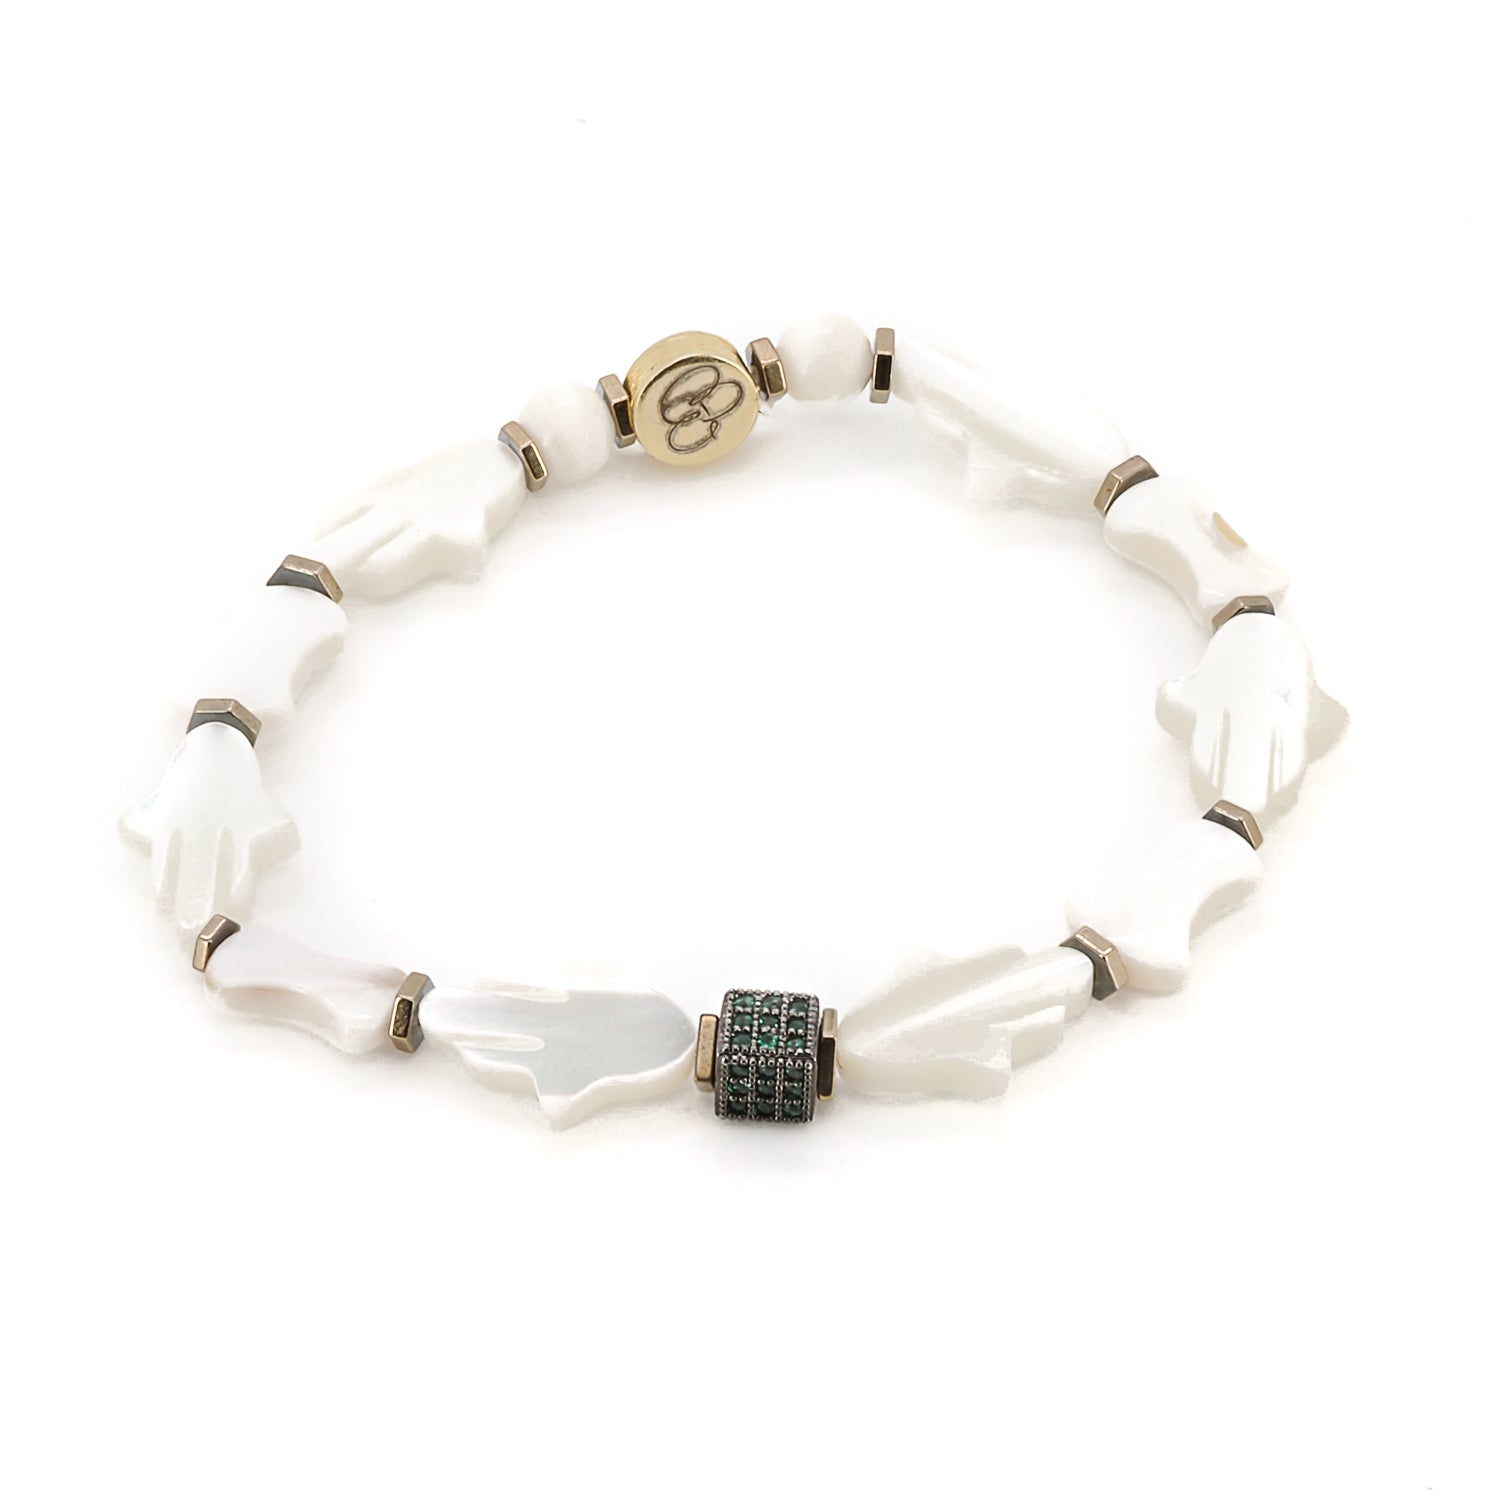 Pearl Hamsa Hand Bracelet featuring white pearl Hamsa hand beads and a green Swarovski crystal bead.